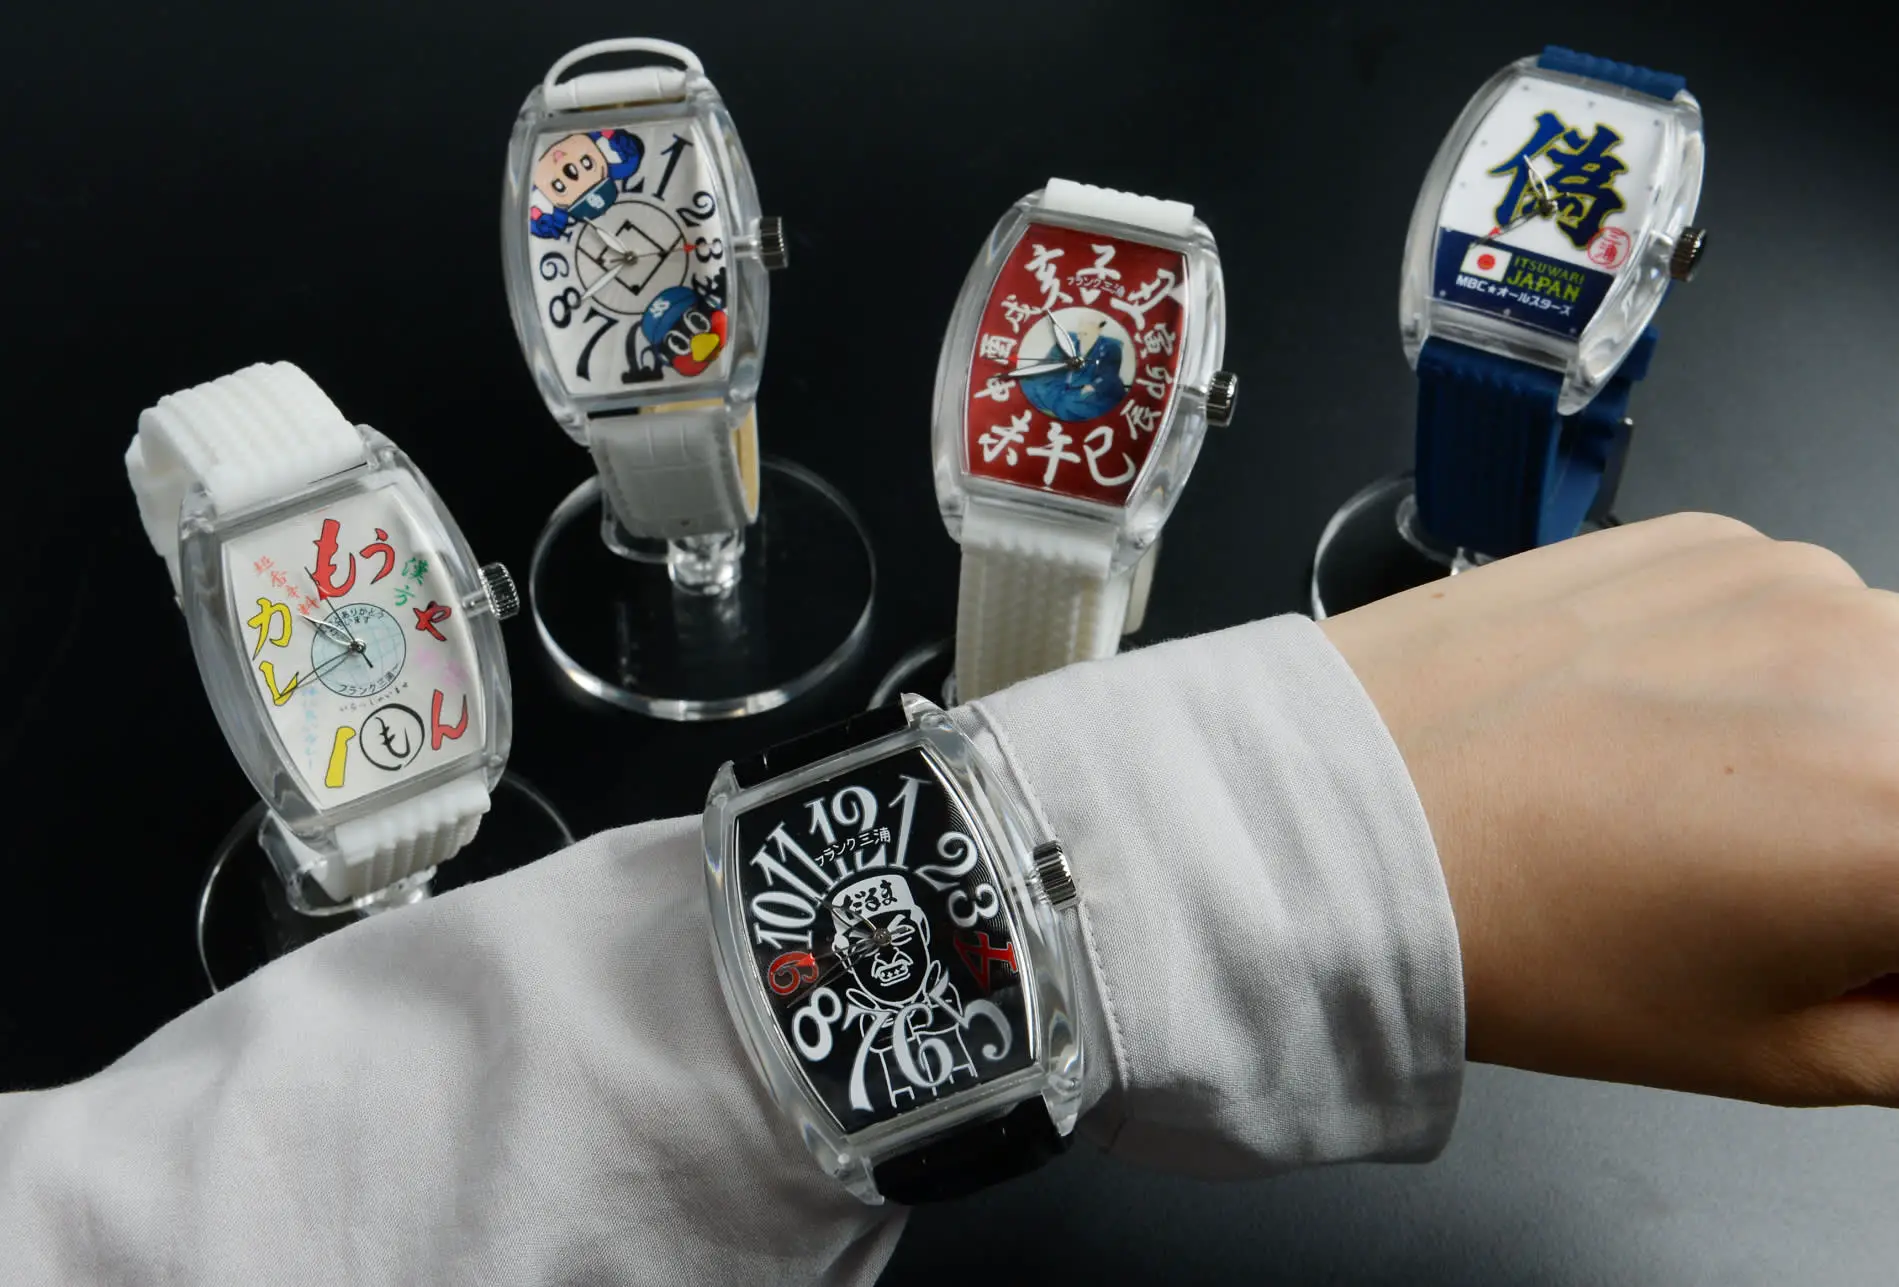 Japanese watch brands